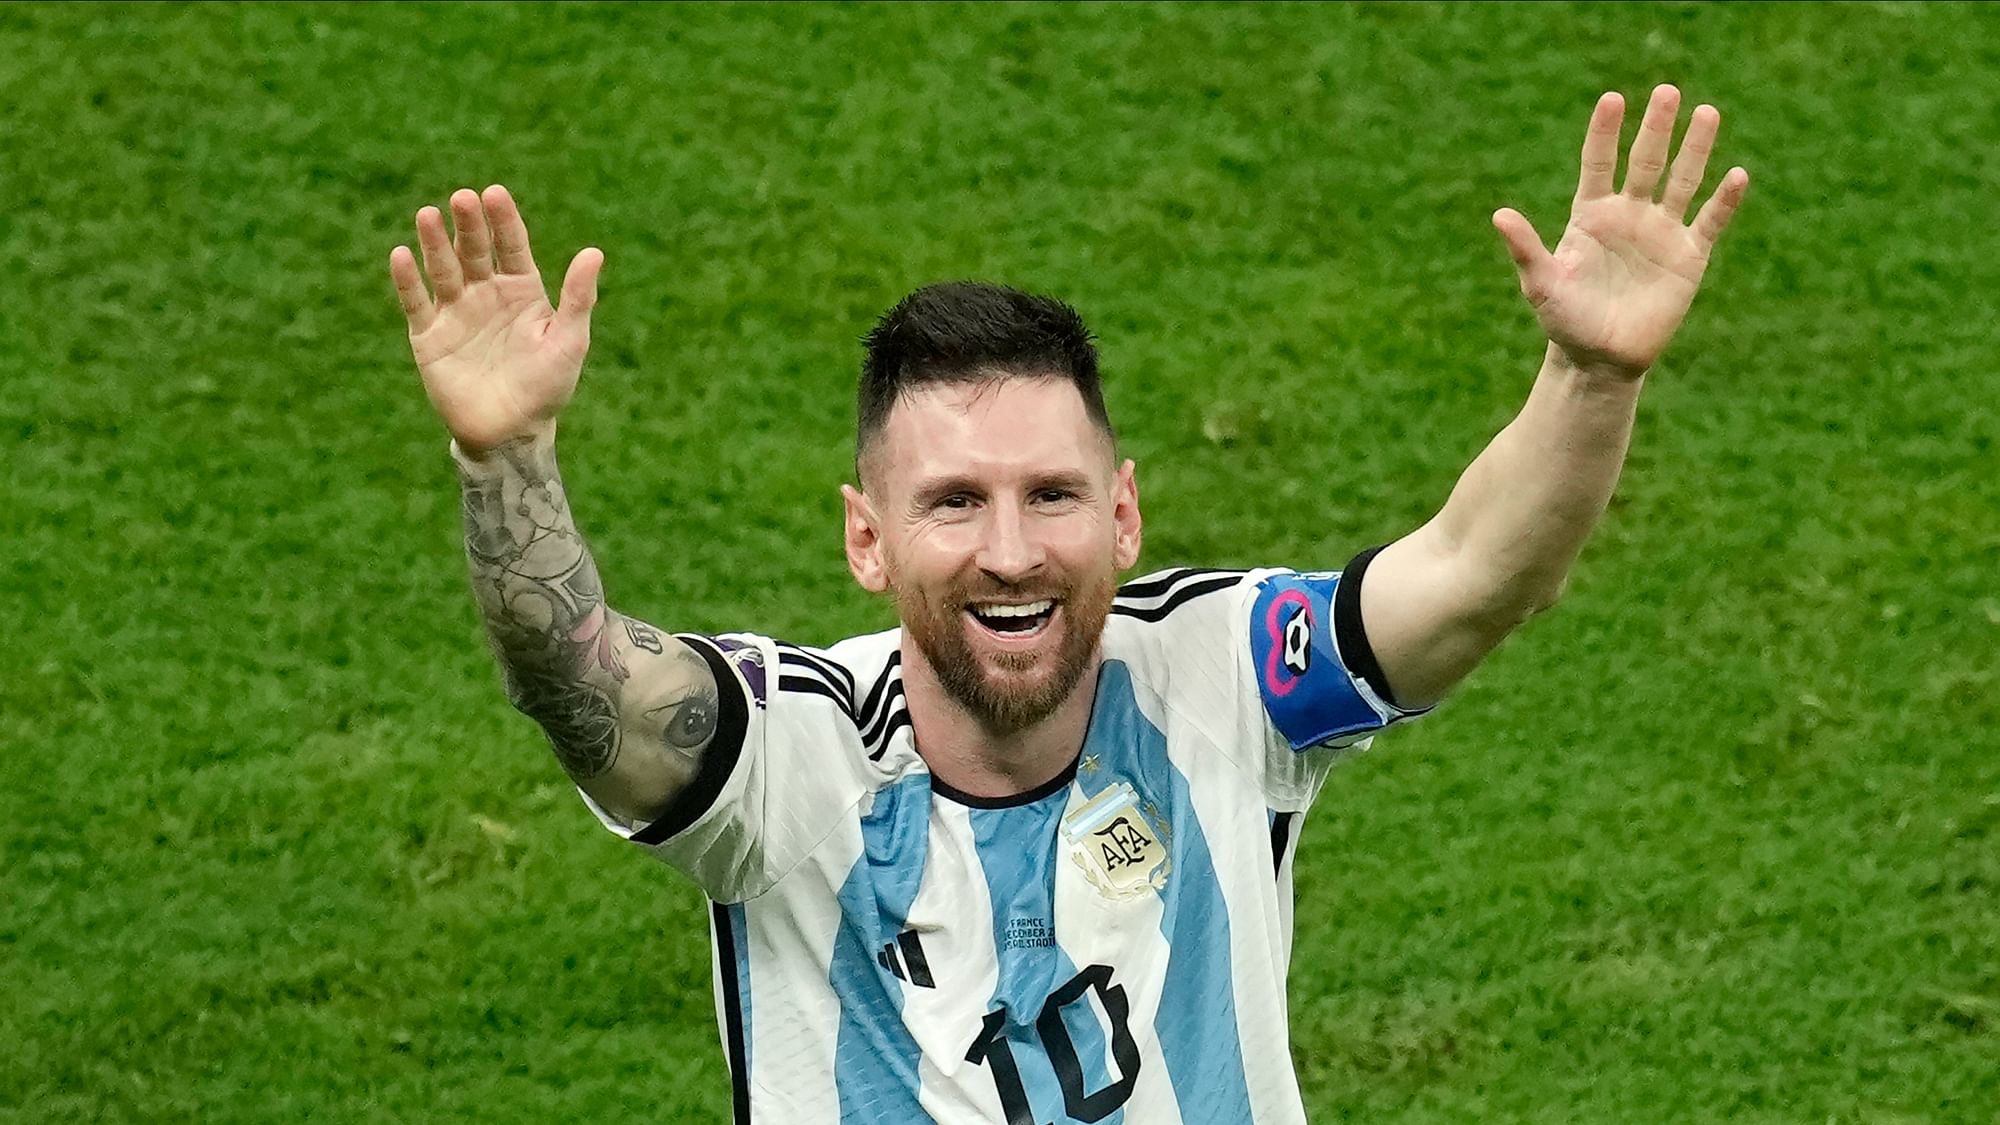 Lionel Messi Argentina Wallpaper Download  MobCup